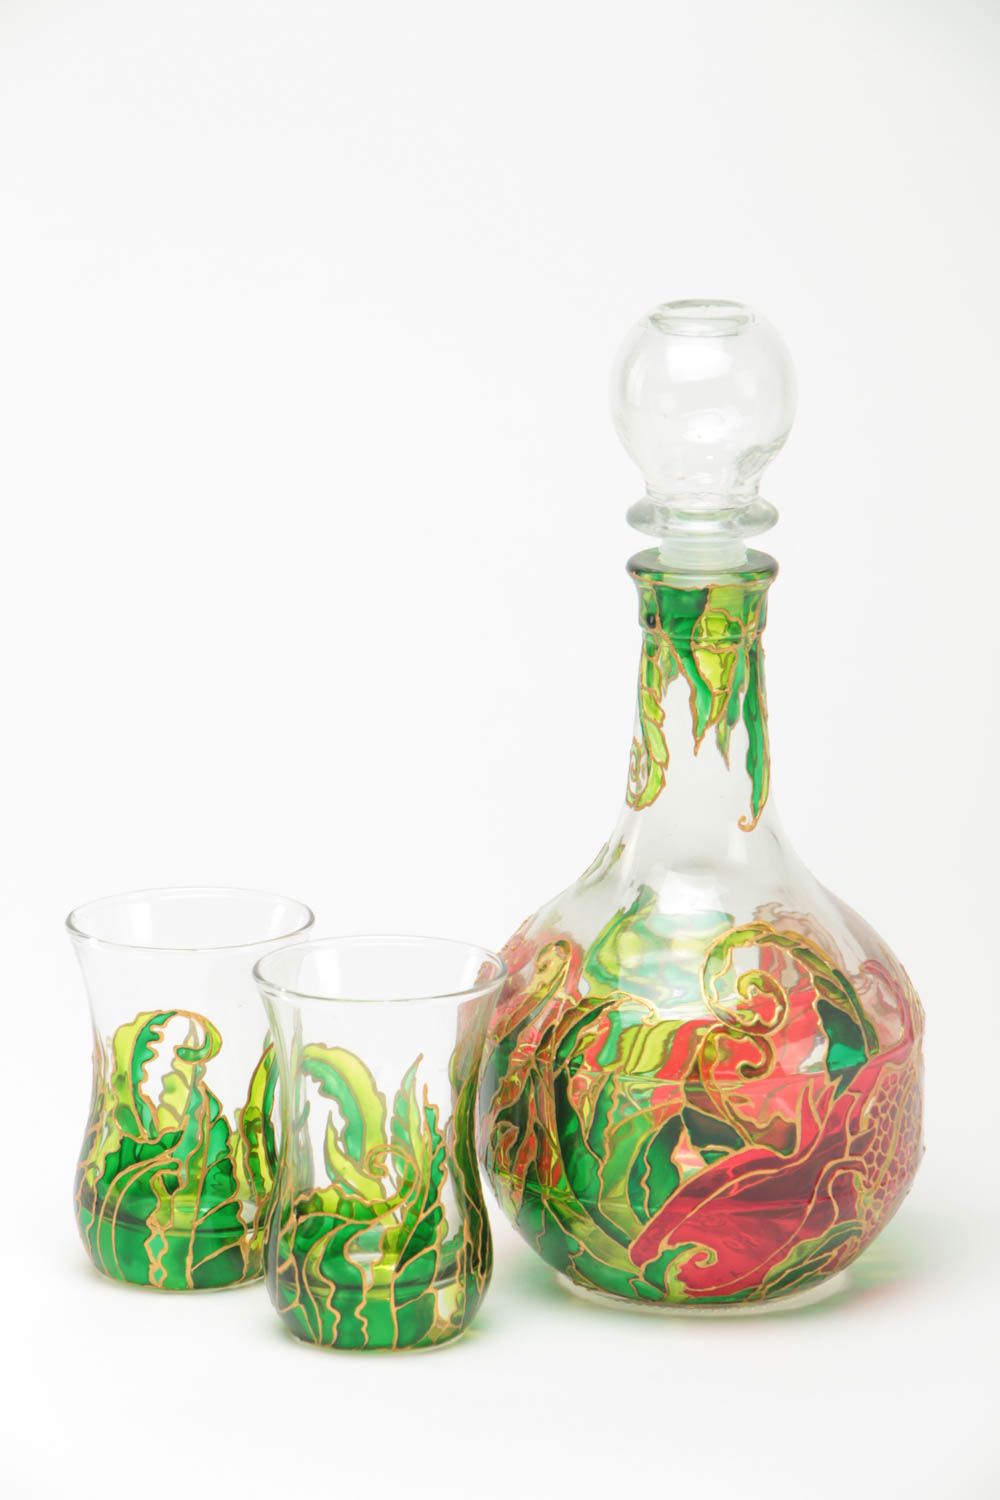 Ensemble carafe et petits verres en verre peints faits main originaux Grenade photo 2